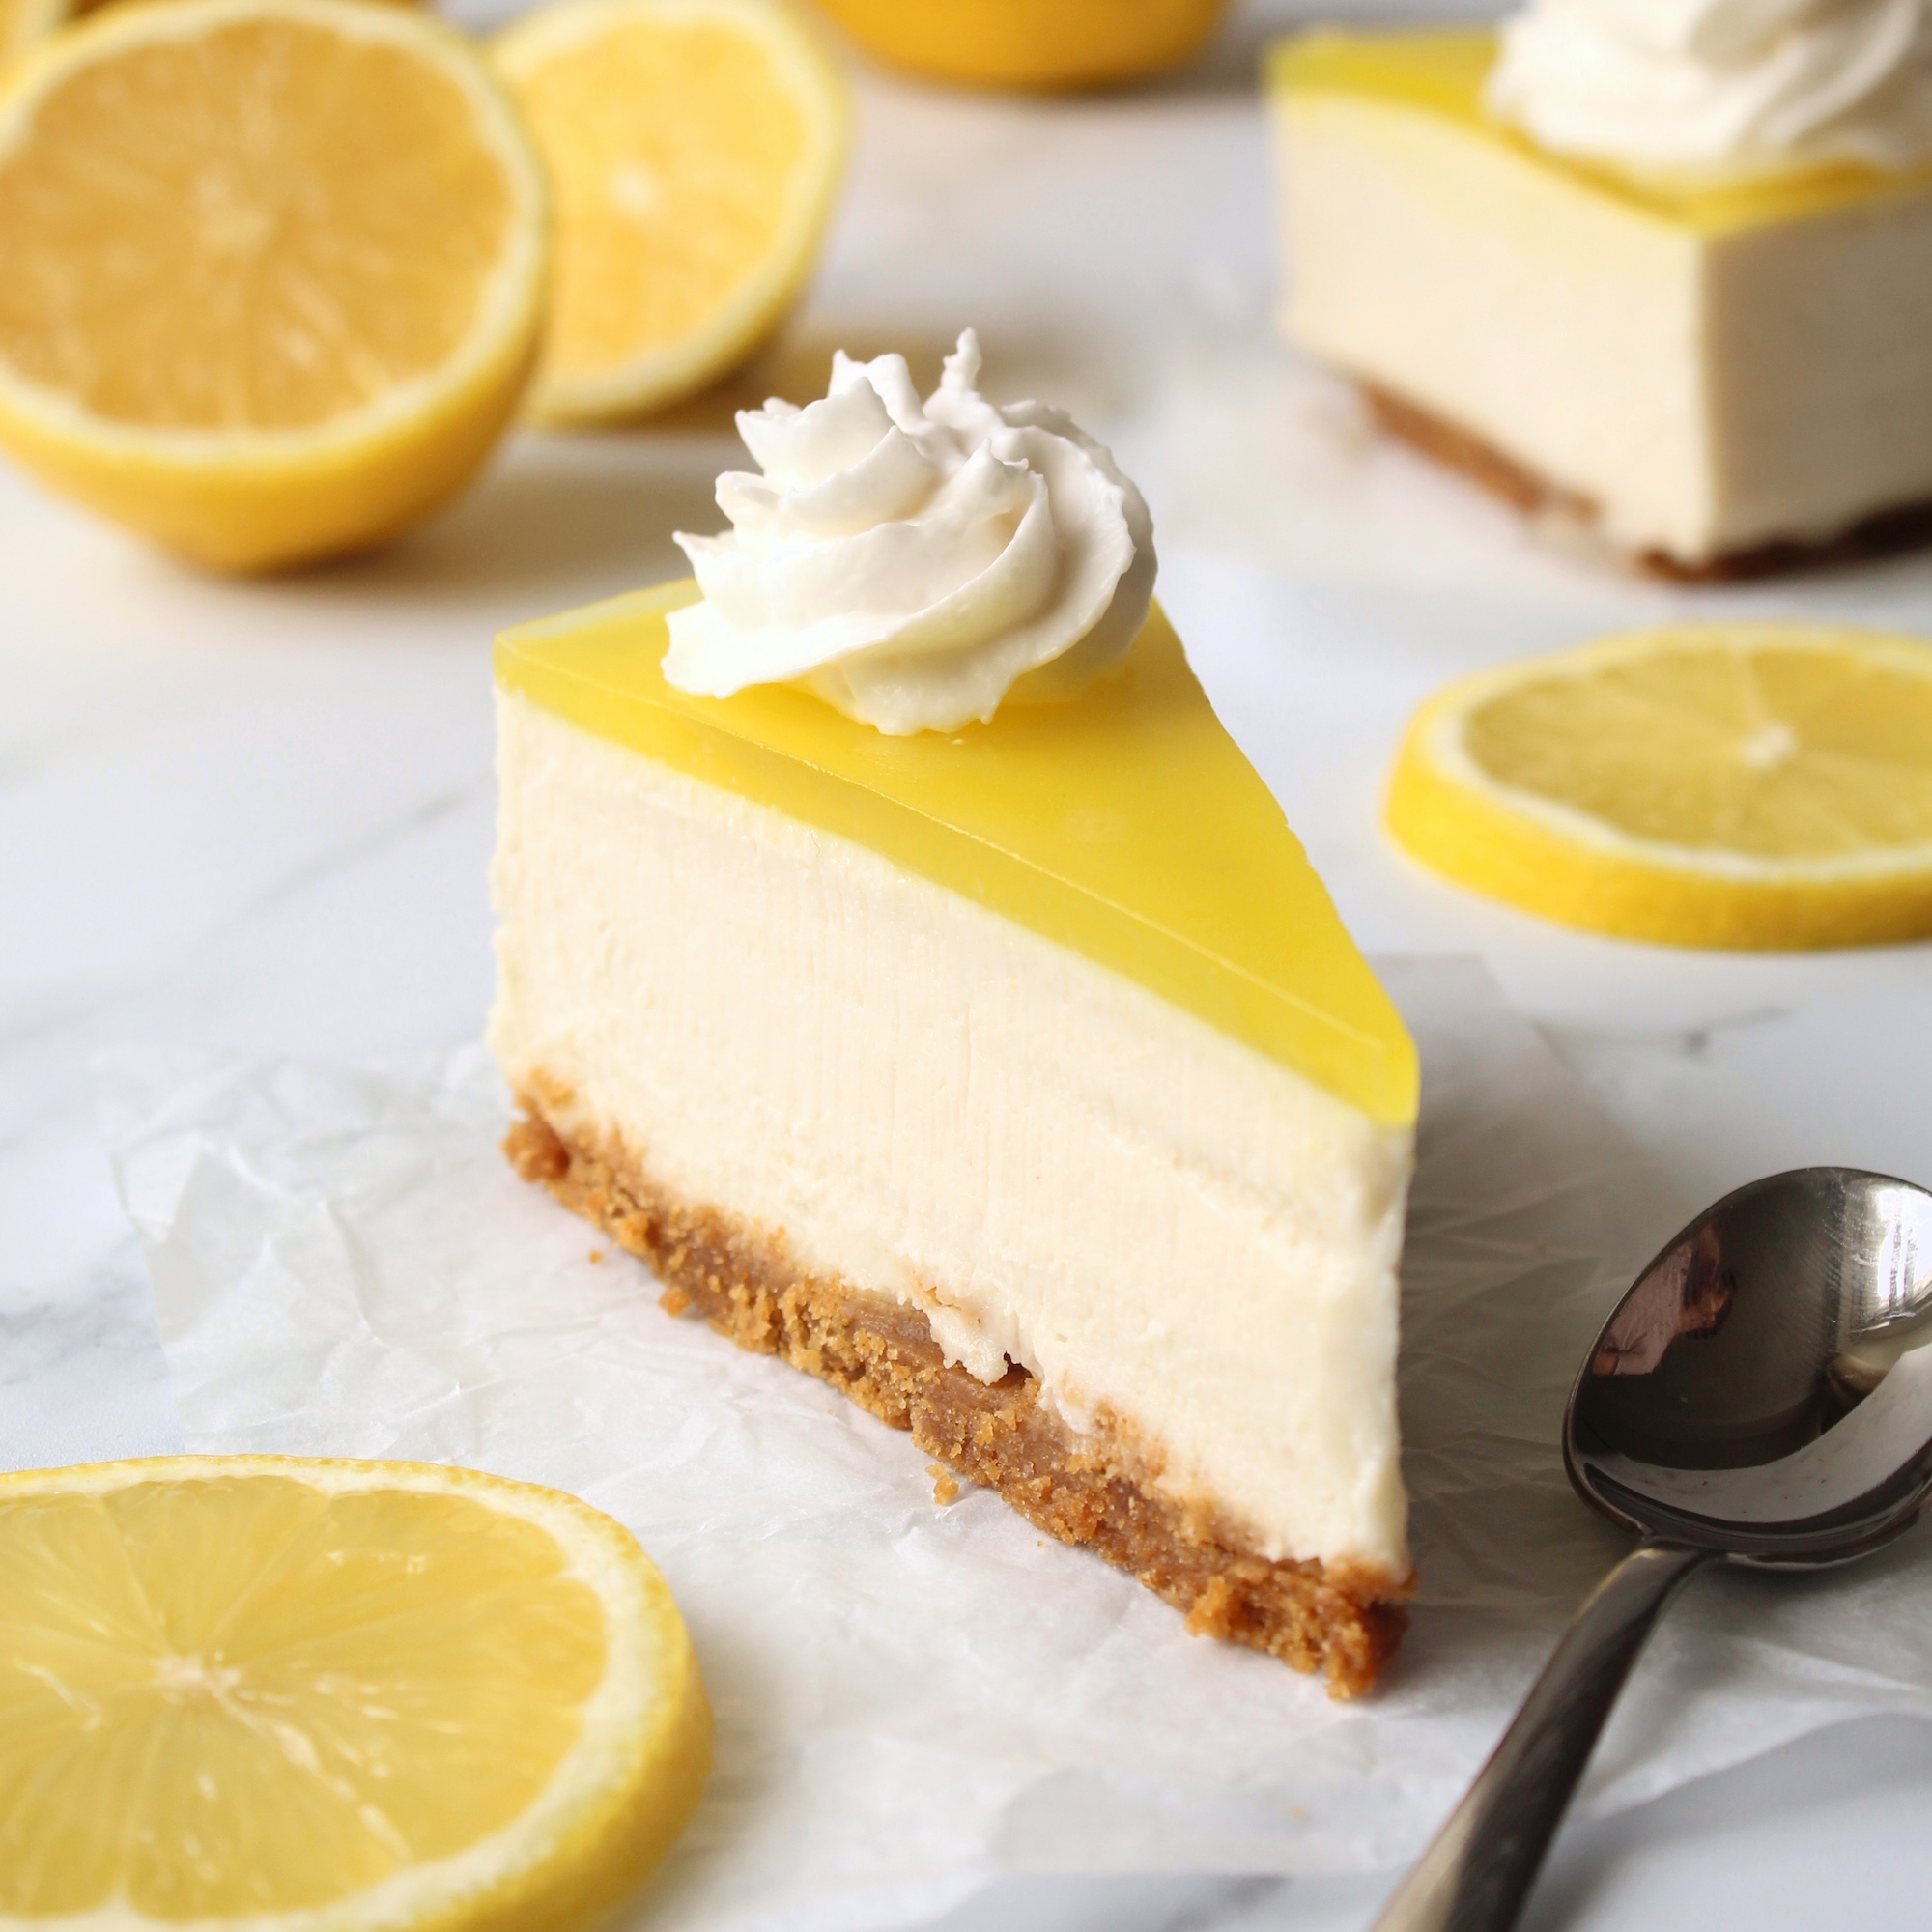 Vegan No-Bake Lemon Cheesecake